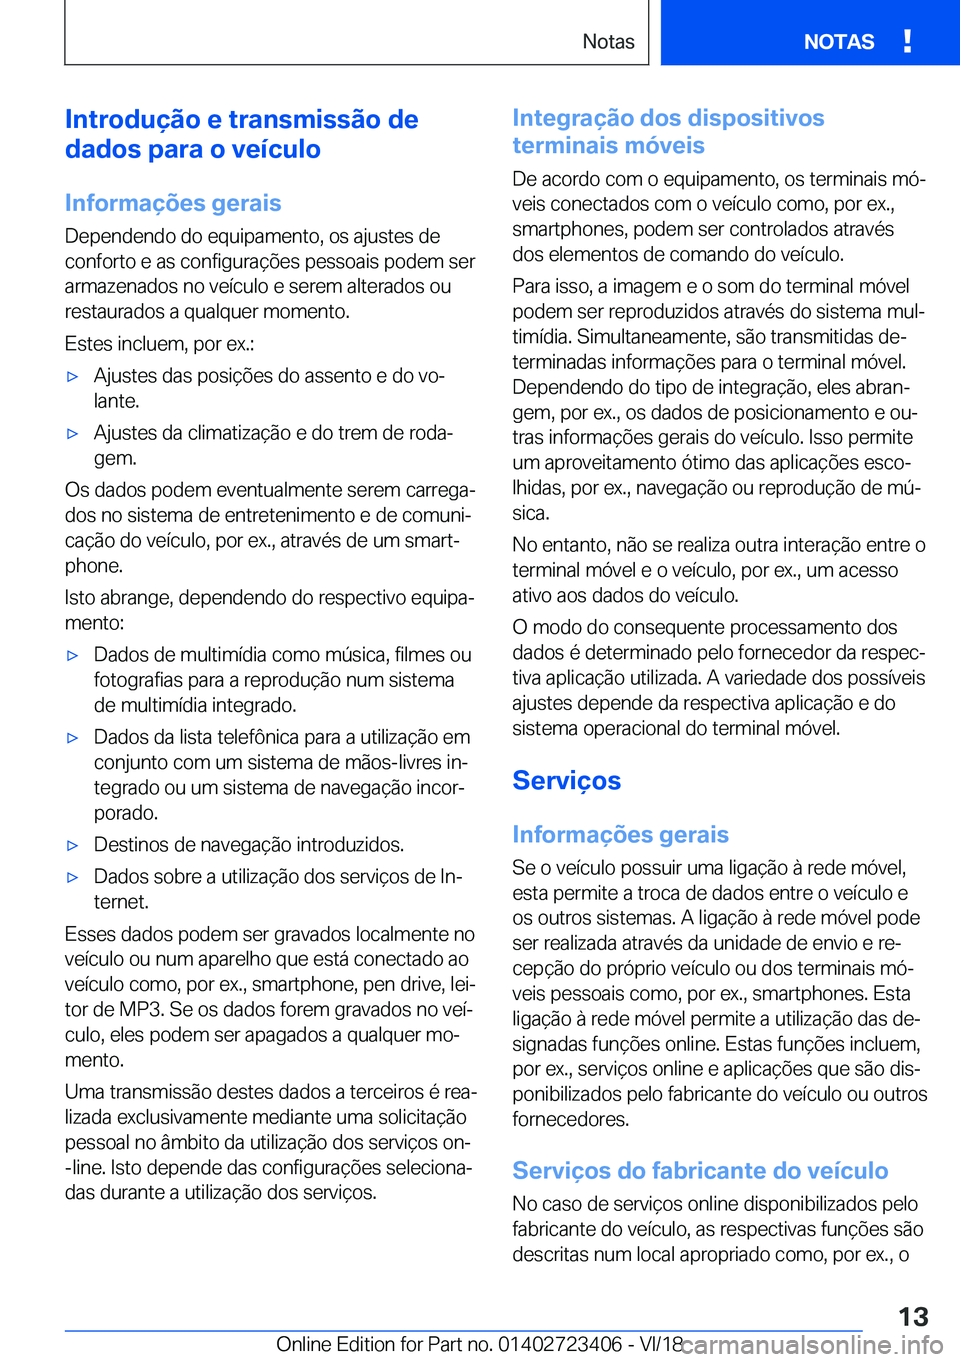 BMW 2 SERIES COUPE 2019  Manual do condutor (in Portuguese) �I�n�t�r�o�d�u�